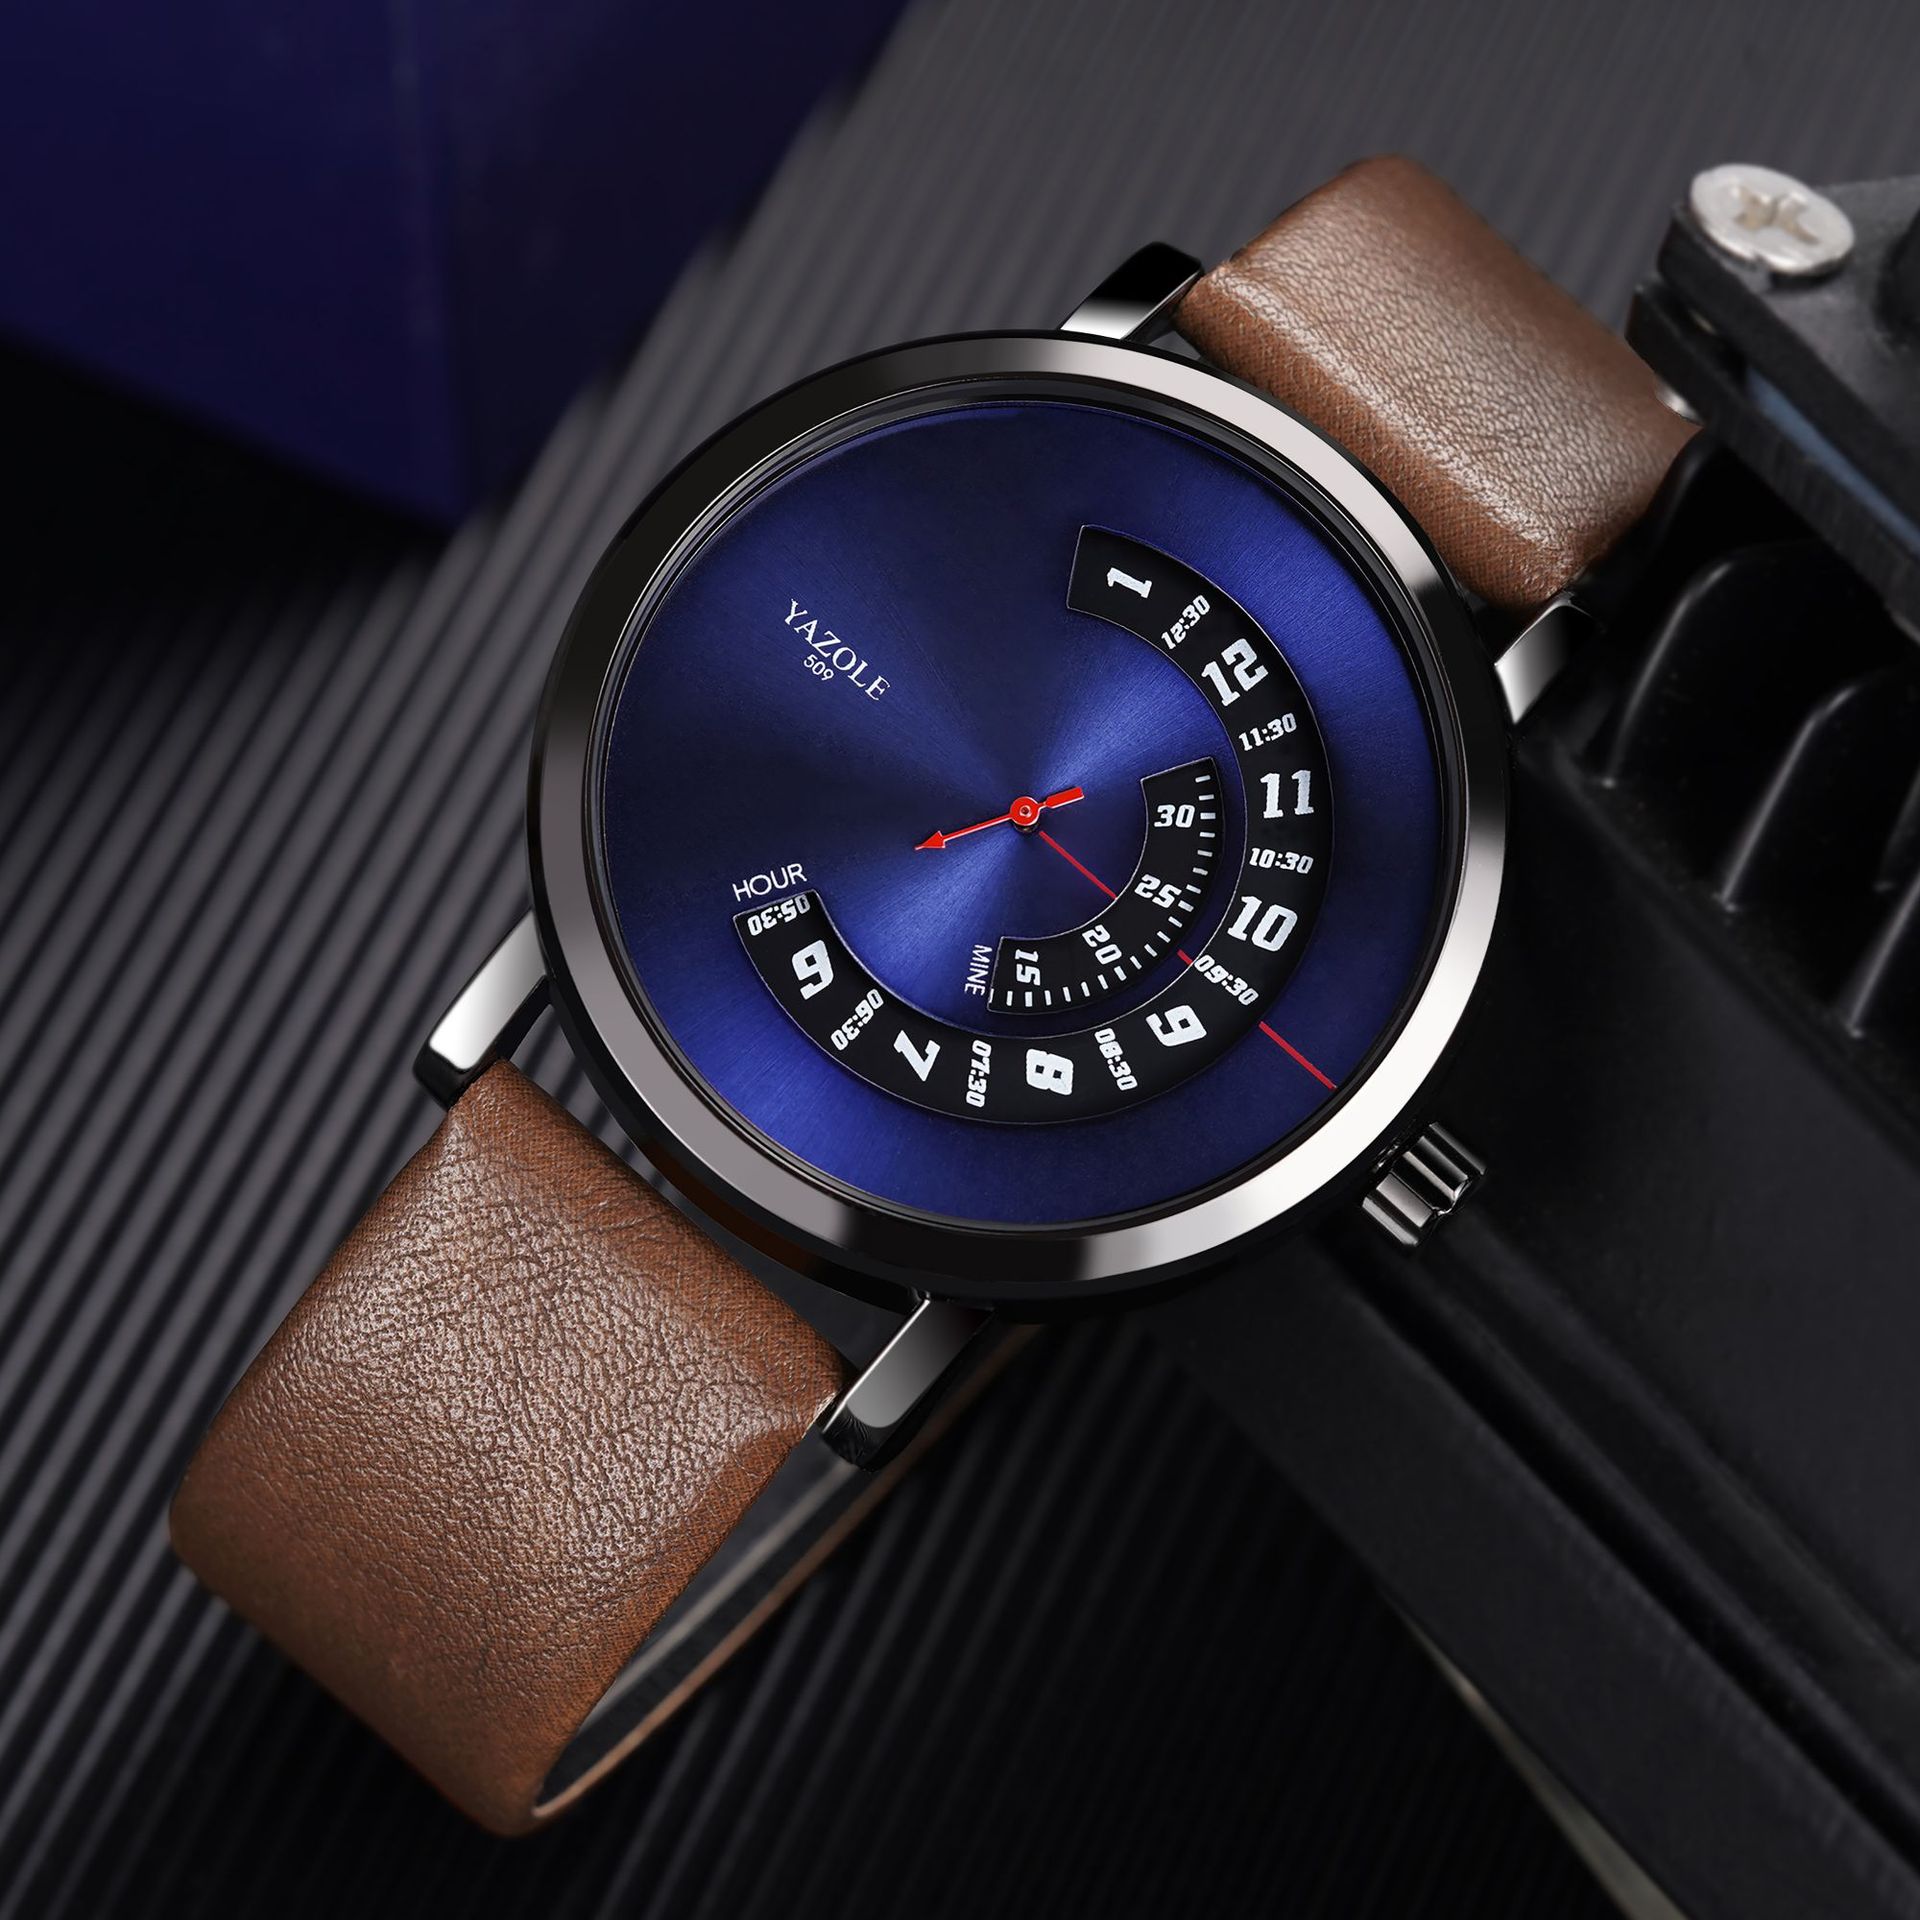 Yazole 509 Cross-Border Fashion Turntable Watch Men's Waterproof Men's Quartz Watch Men's Watch Watch Wholesale